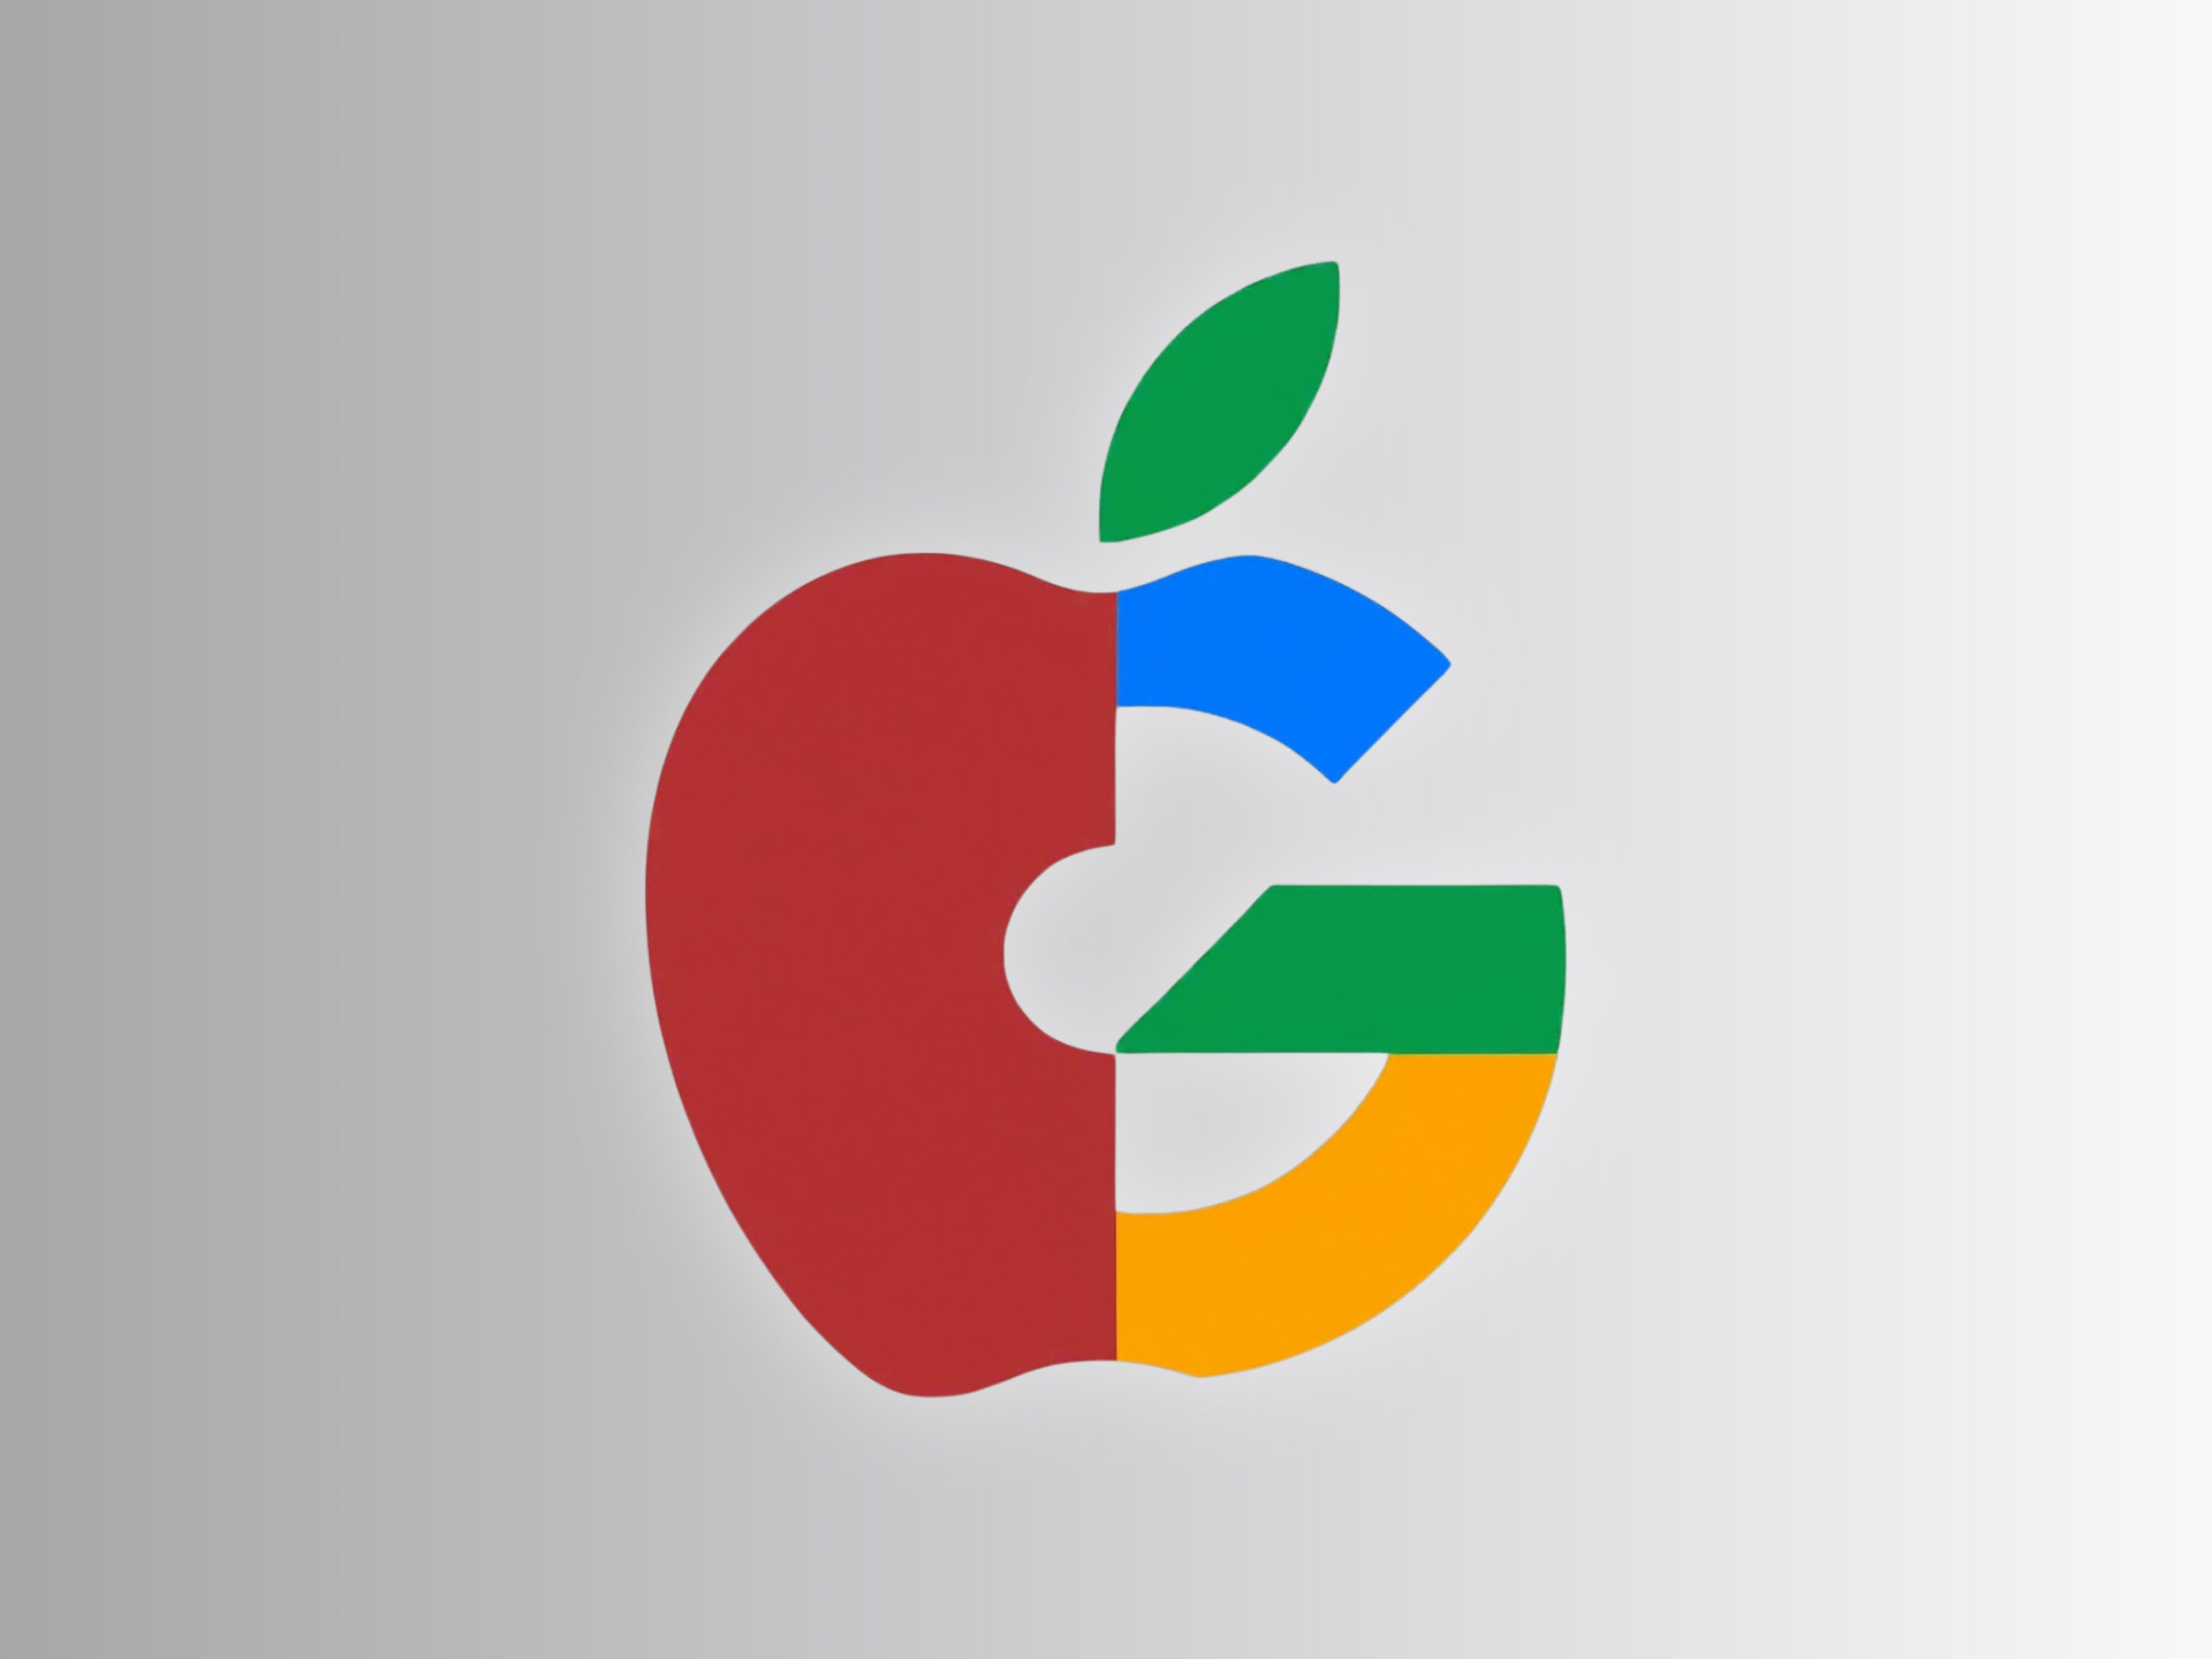 Combined apple google logo image